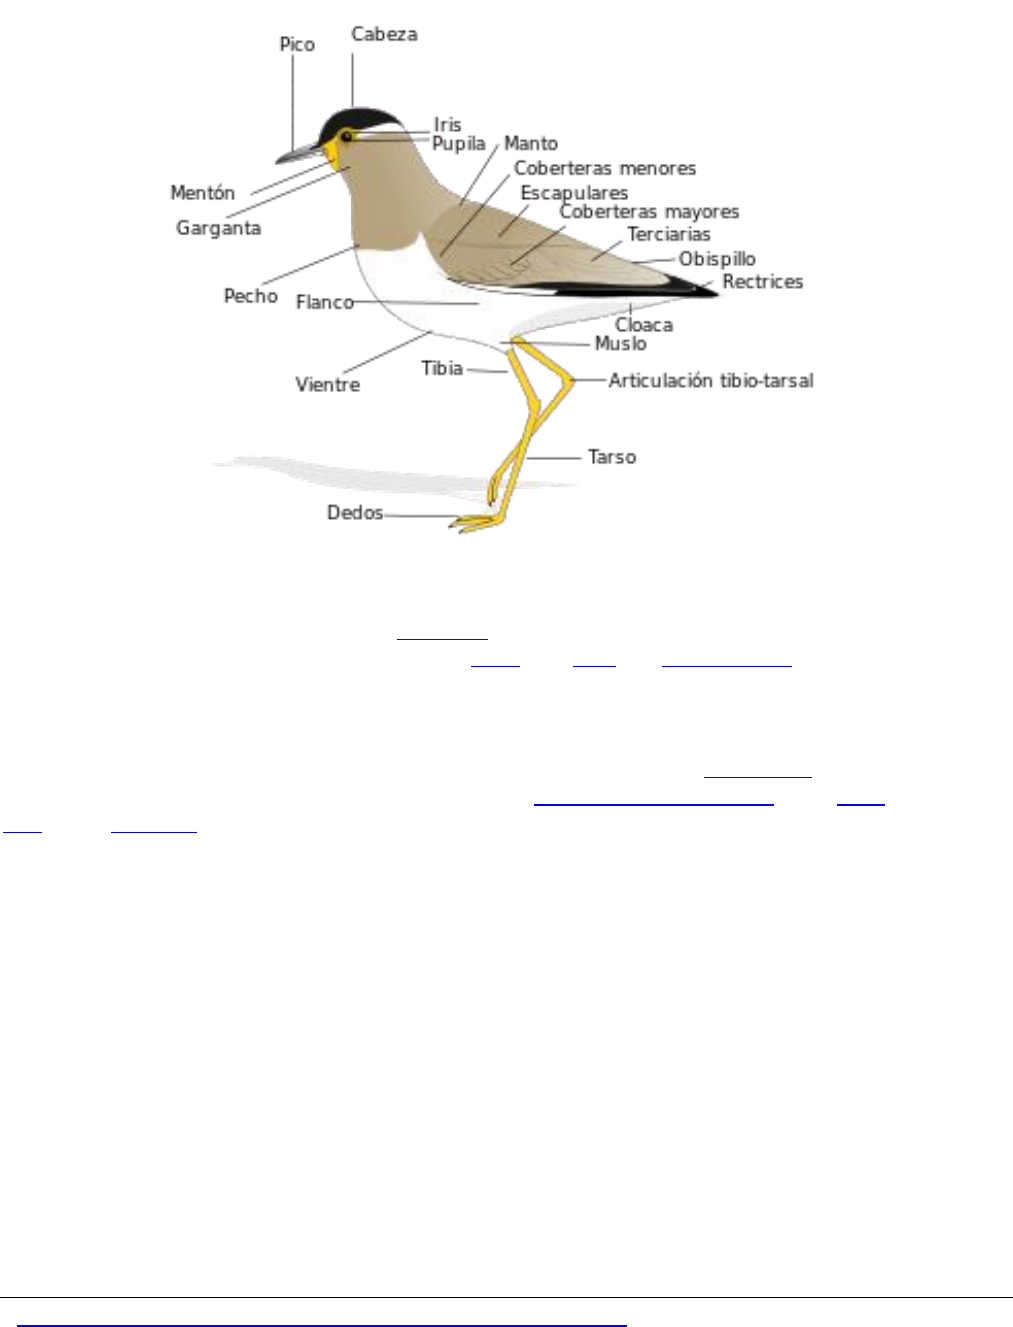 File:Anatomía de la rodilla.jpg - Wikimedia Commons